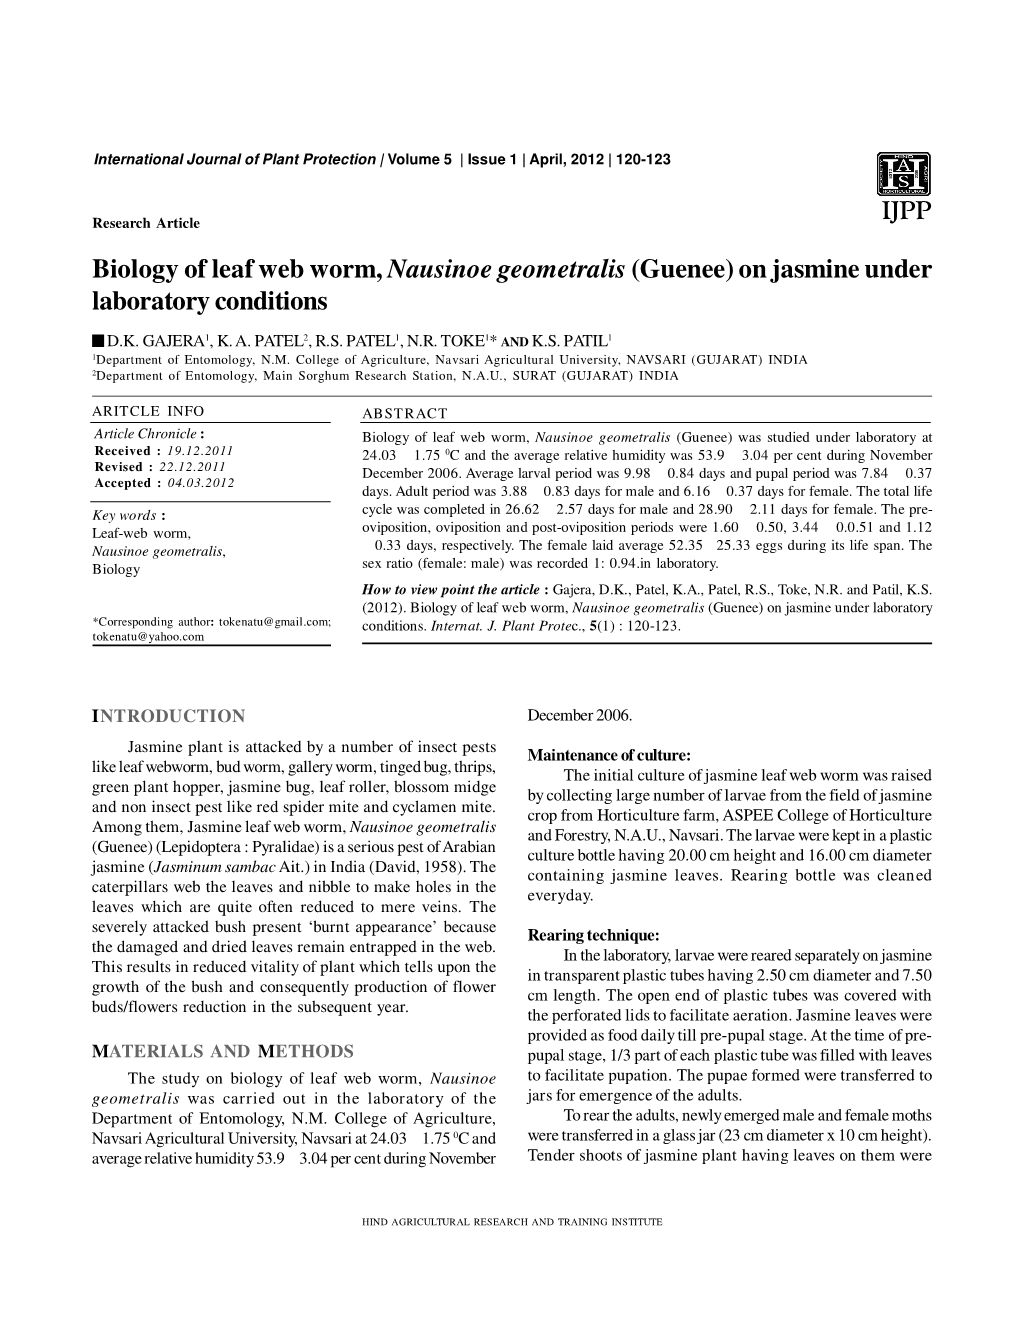 Biology of Leaf Web Worm, Nausinoe Geometralis (Guenee) on Jasmine Under Laboratory Conditions